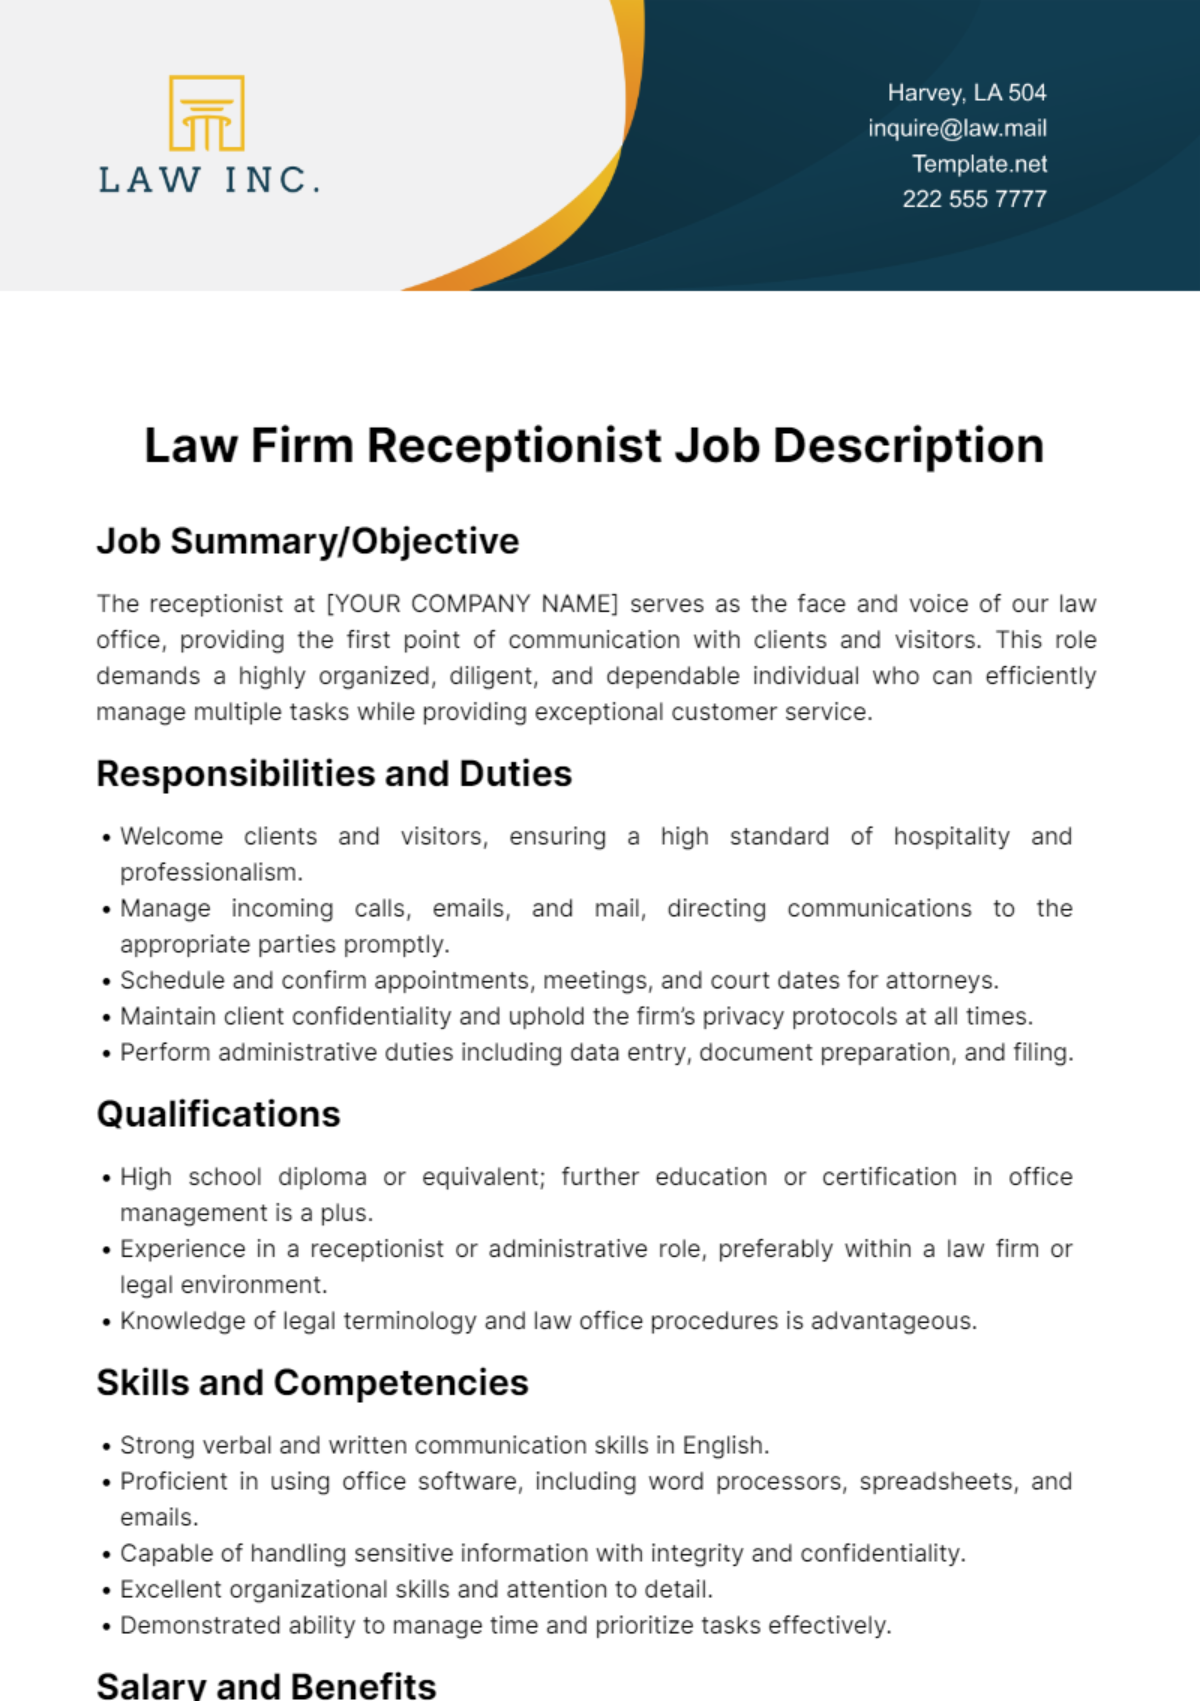 Law Firm Receptionist Job Description Template